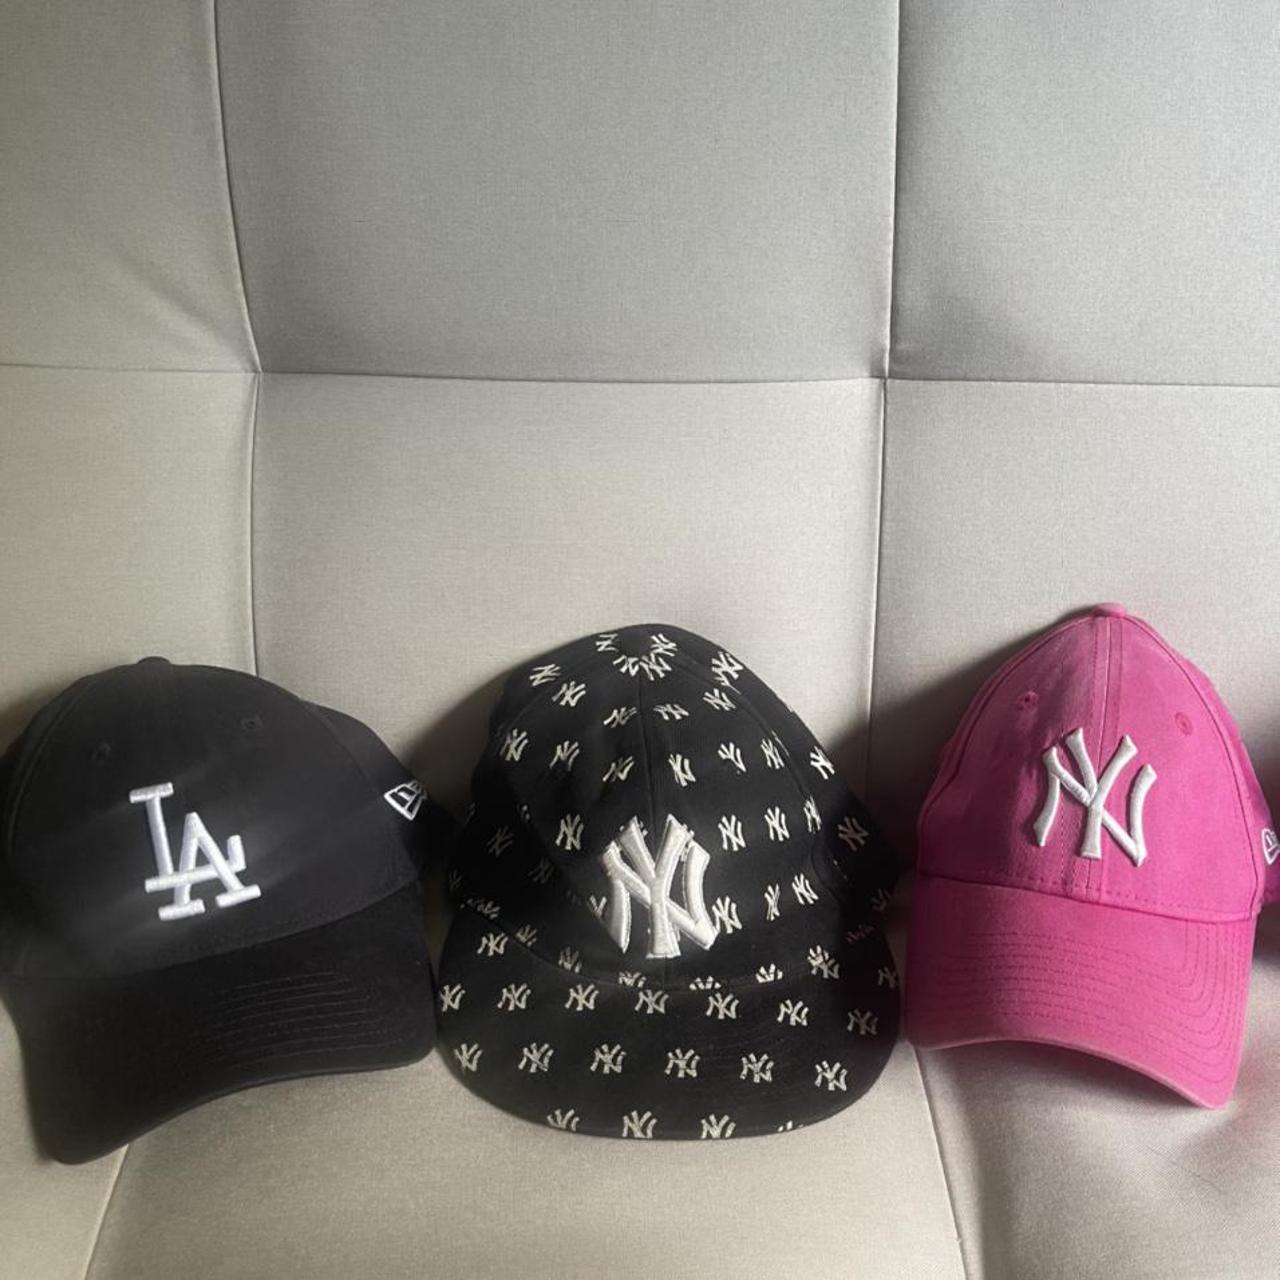 New Era Men's Black and Pink Hat